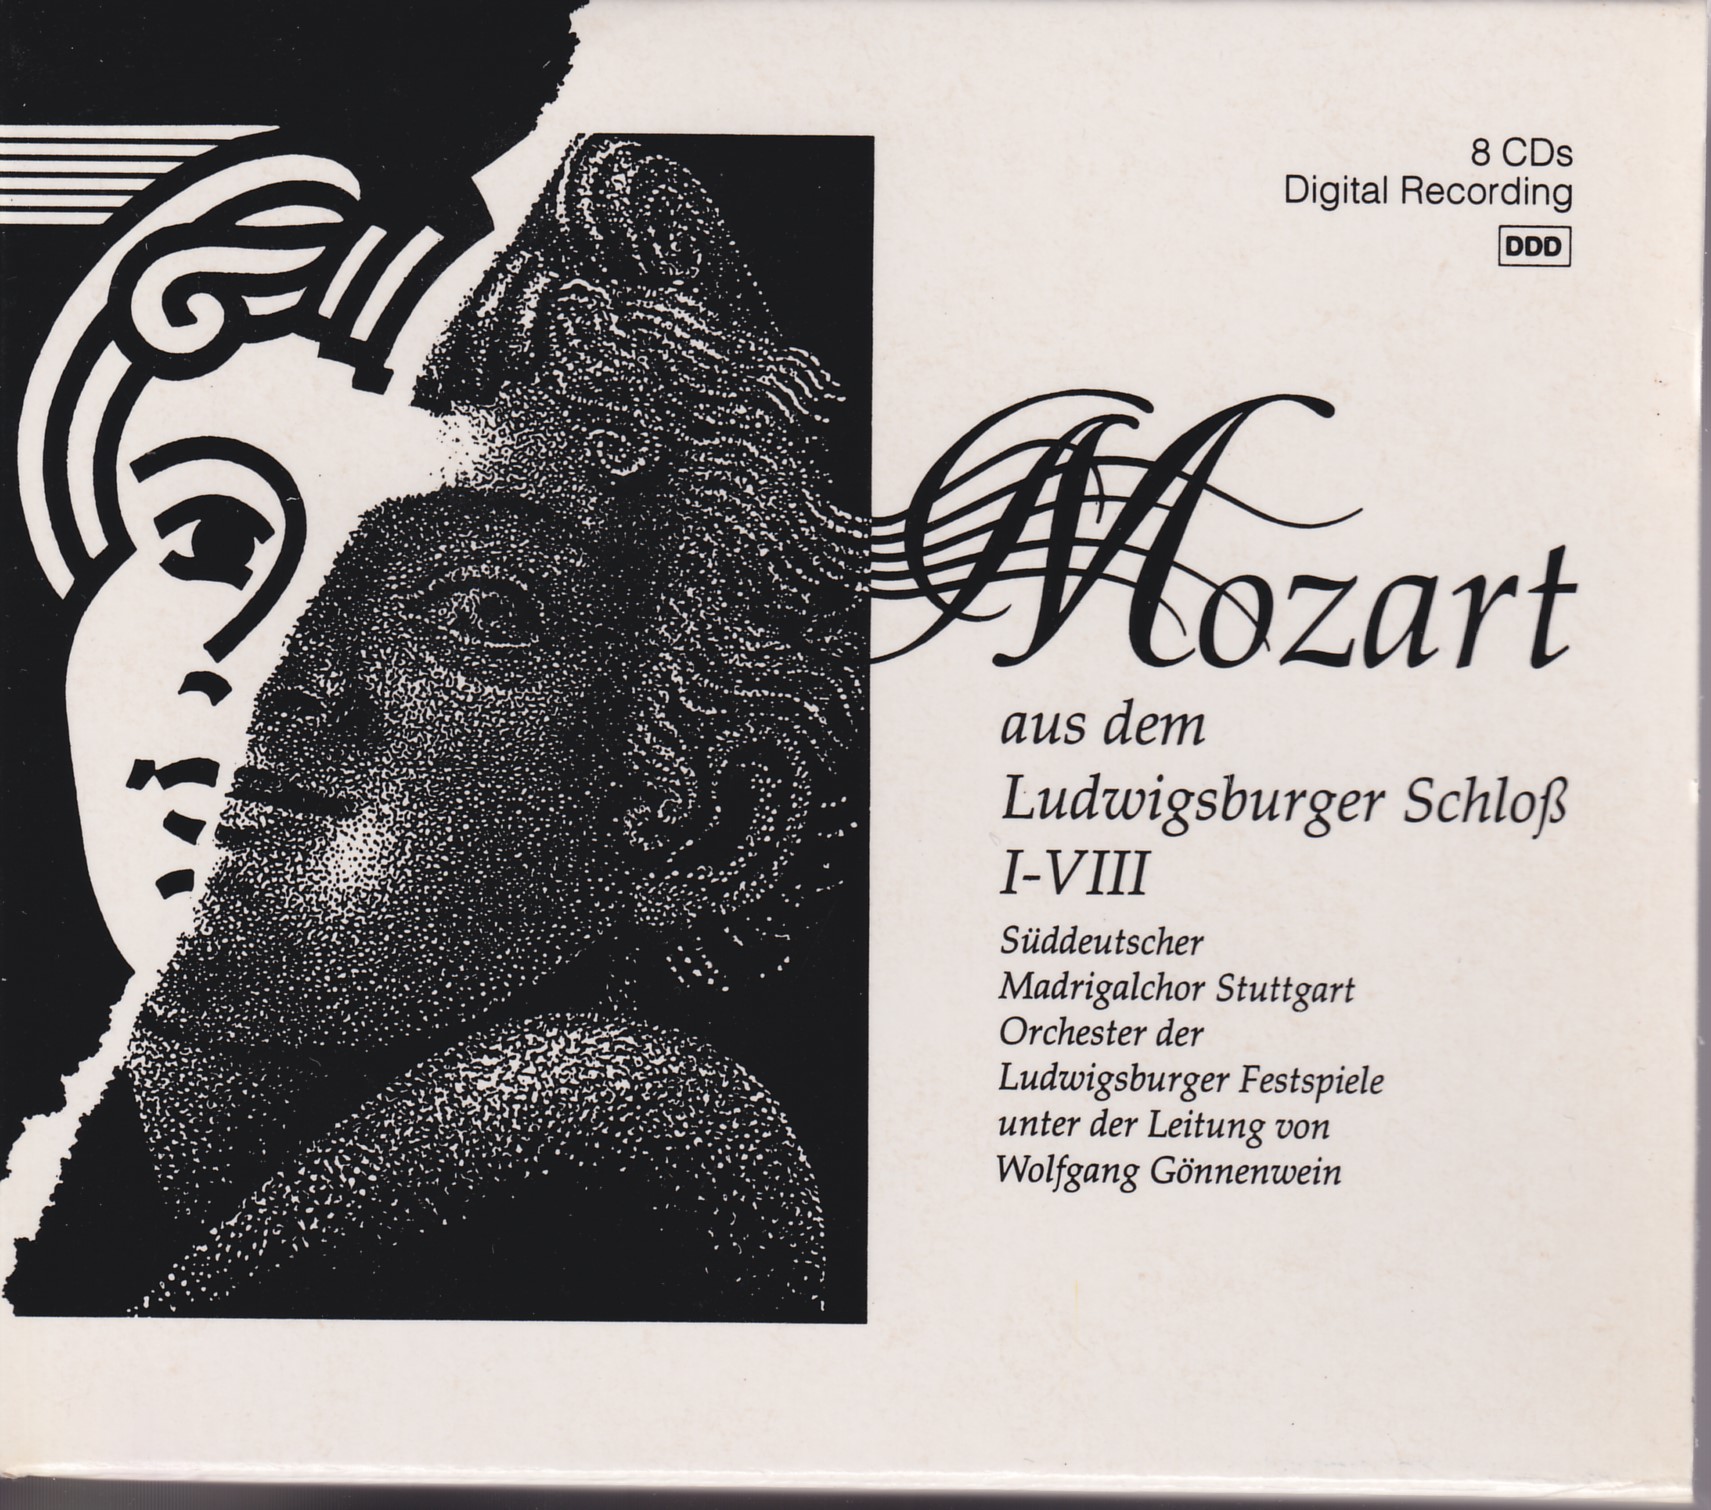 Mozart aus dem Ludwigsburger Schloß I-VIII